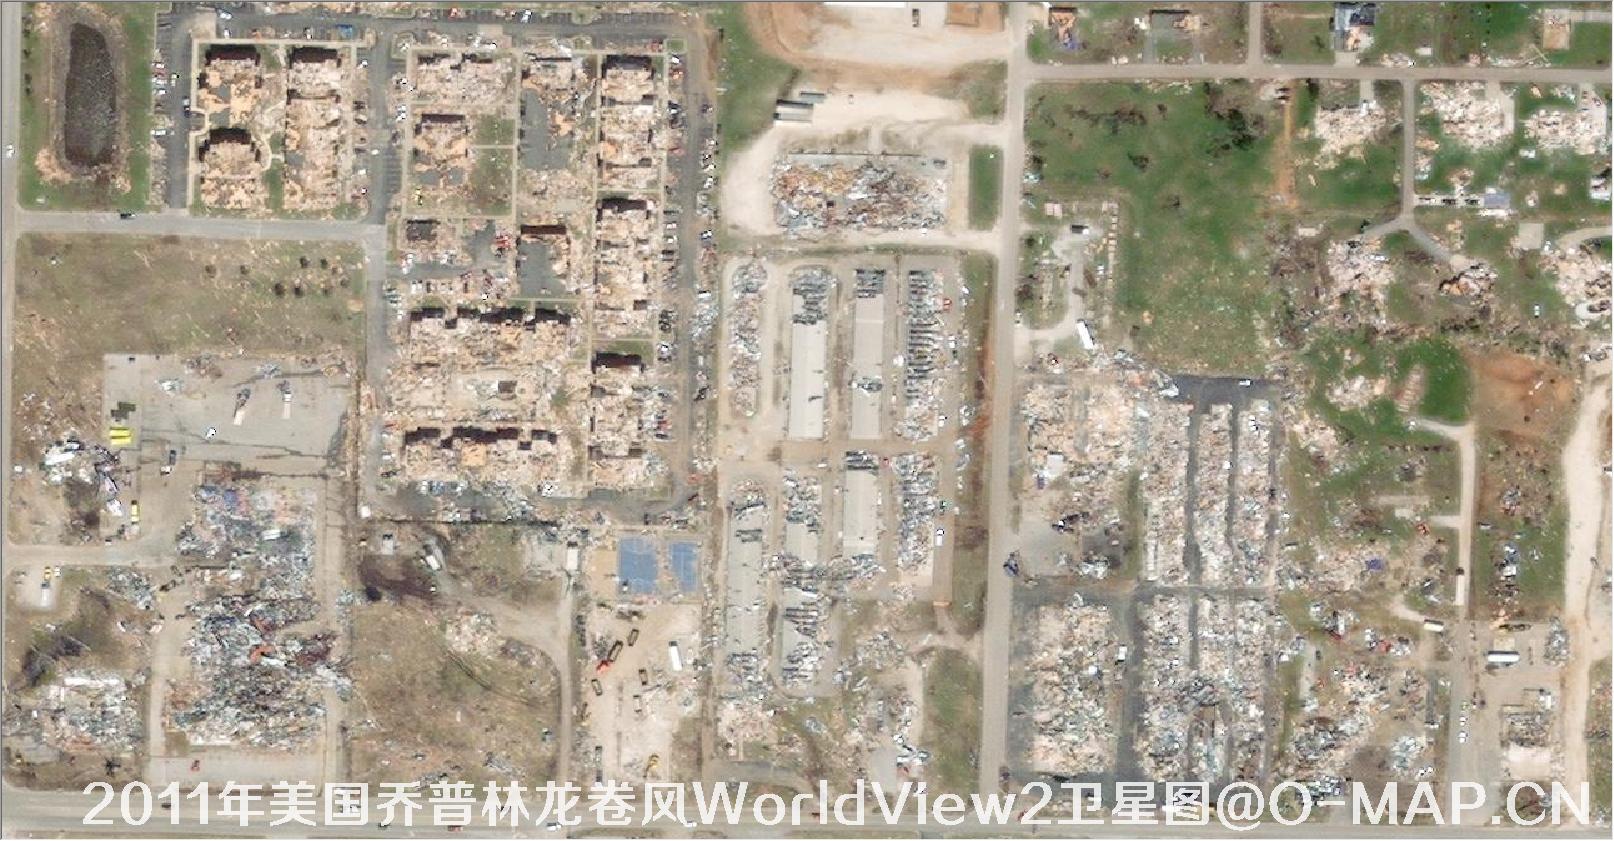 WorldView2卫星拍摄的2011年美国乔普林市龙卷风灾害画面